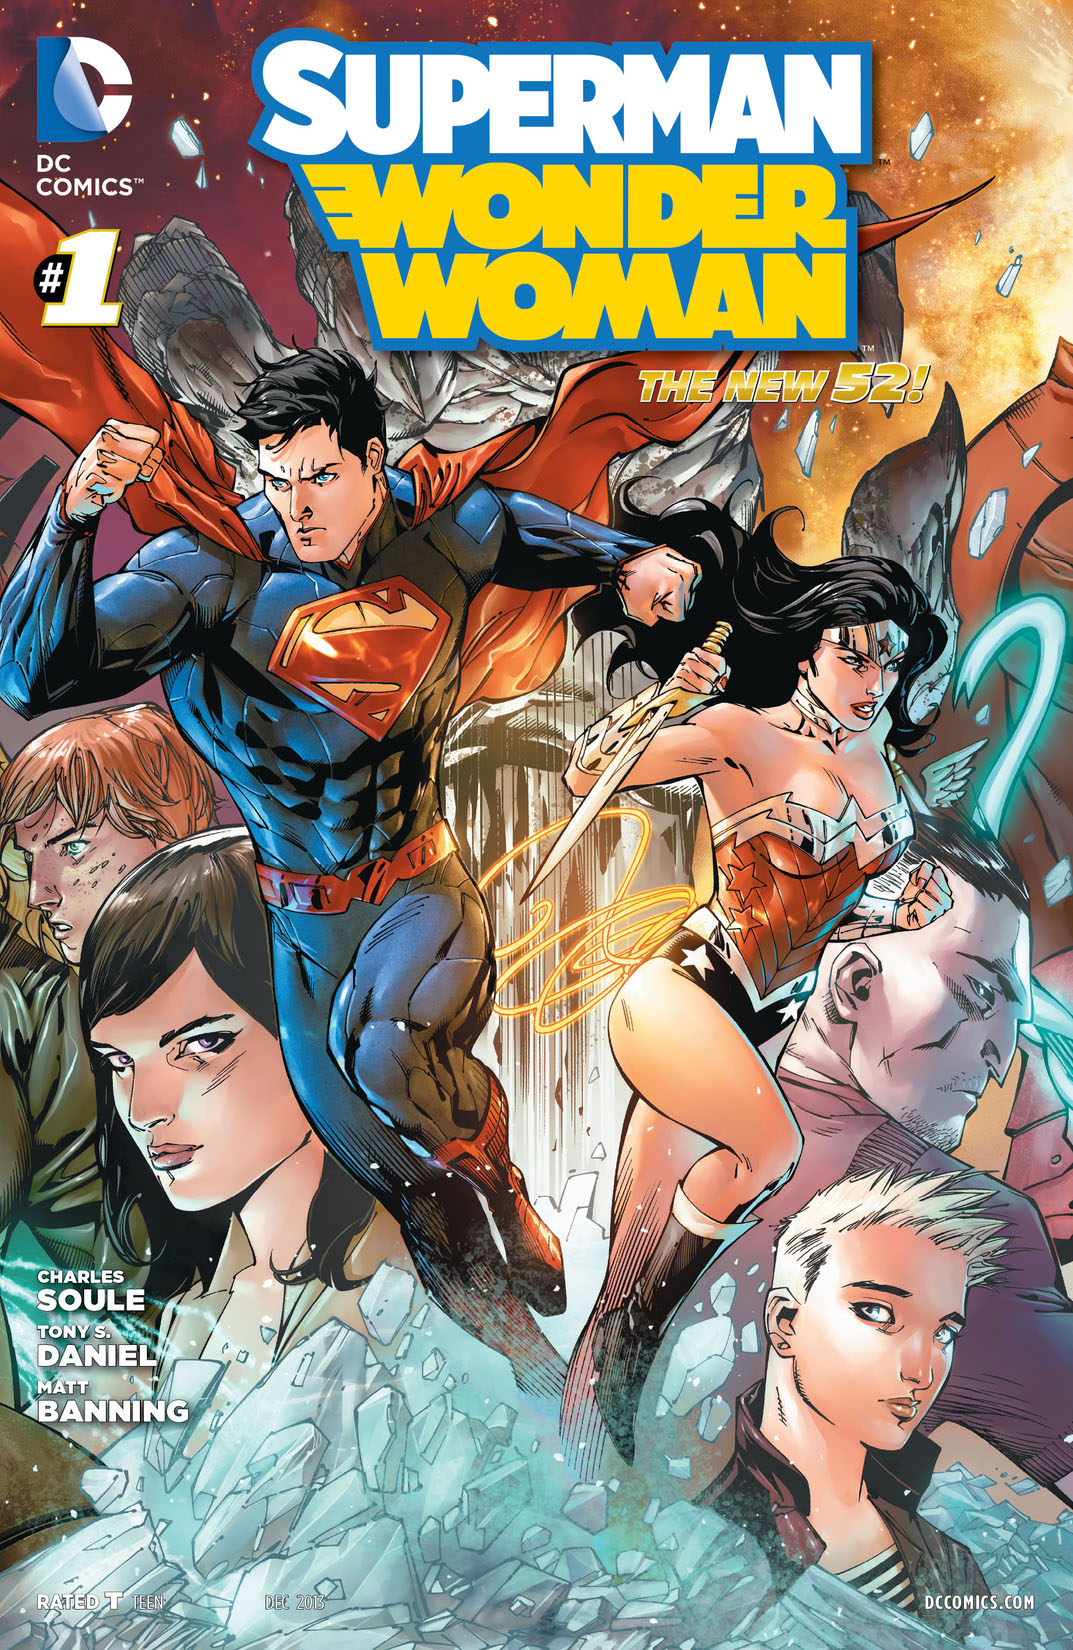 Superman/Wonder Woman #1 preview images